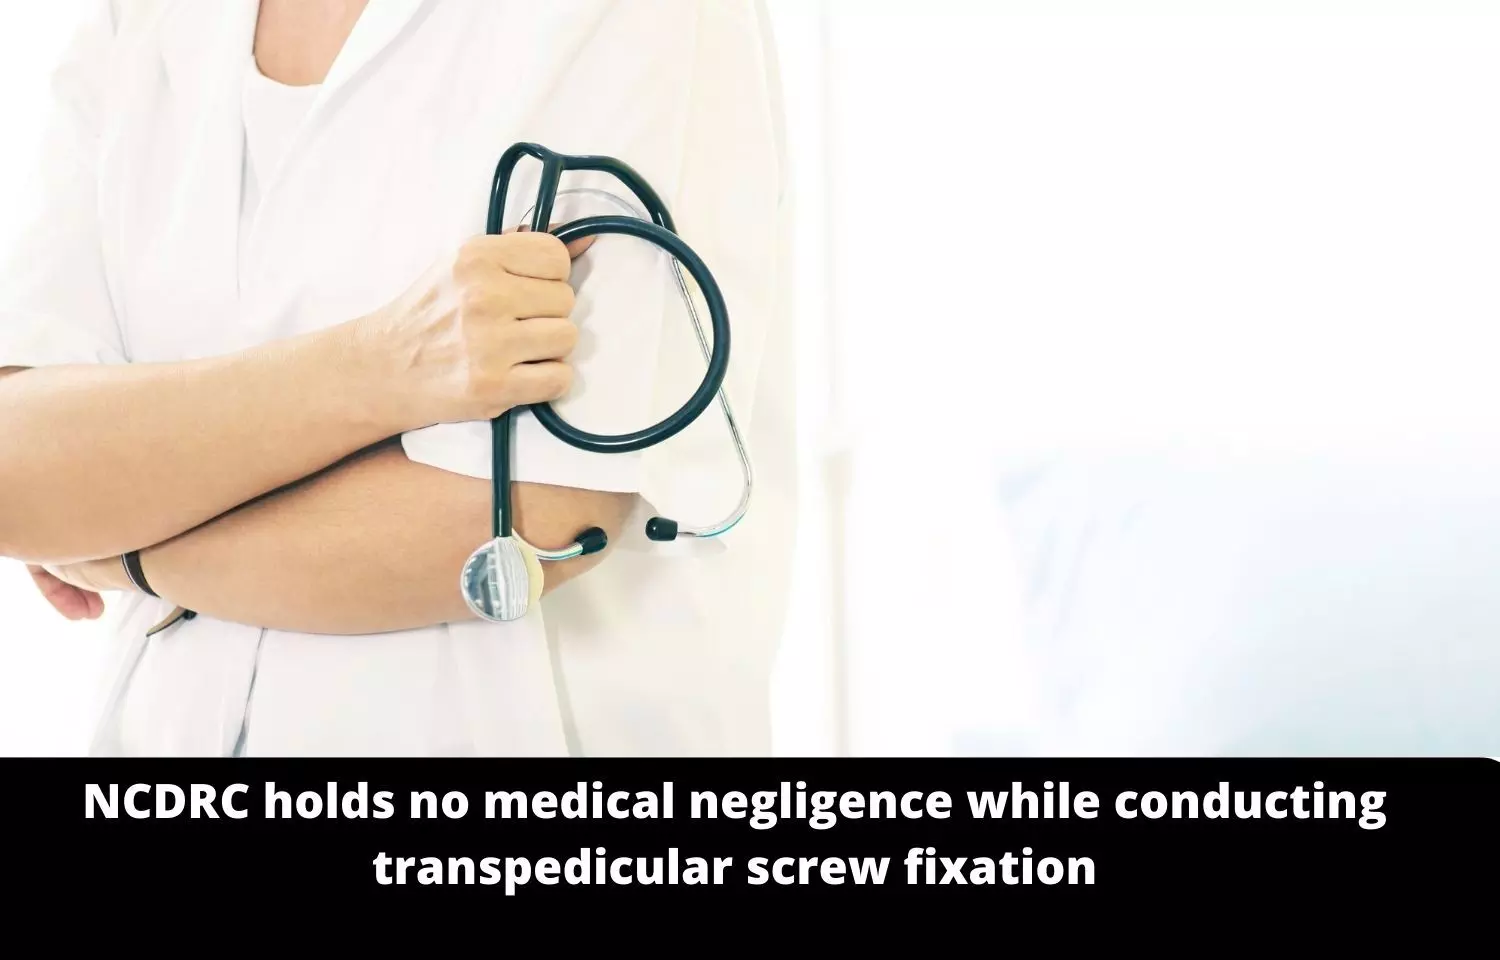 NCDRC holds no medical negligence while conducting transpedicular screw fixation, exonerates neurosurgeon